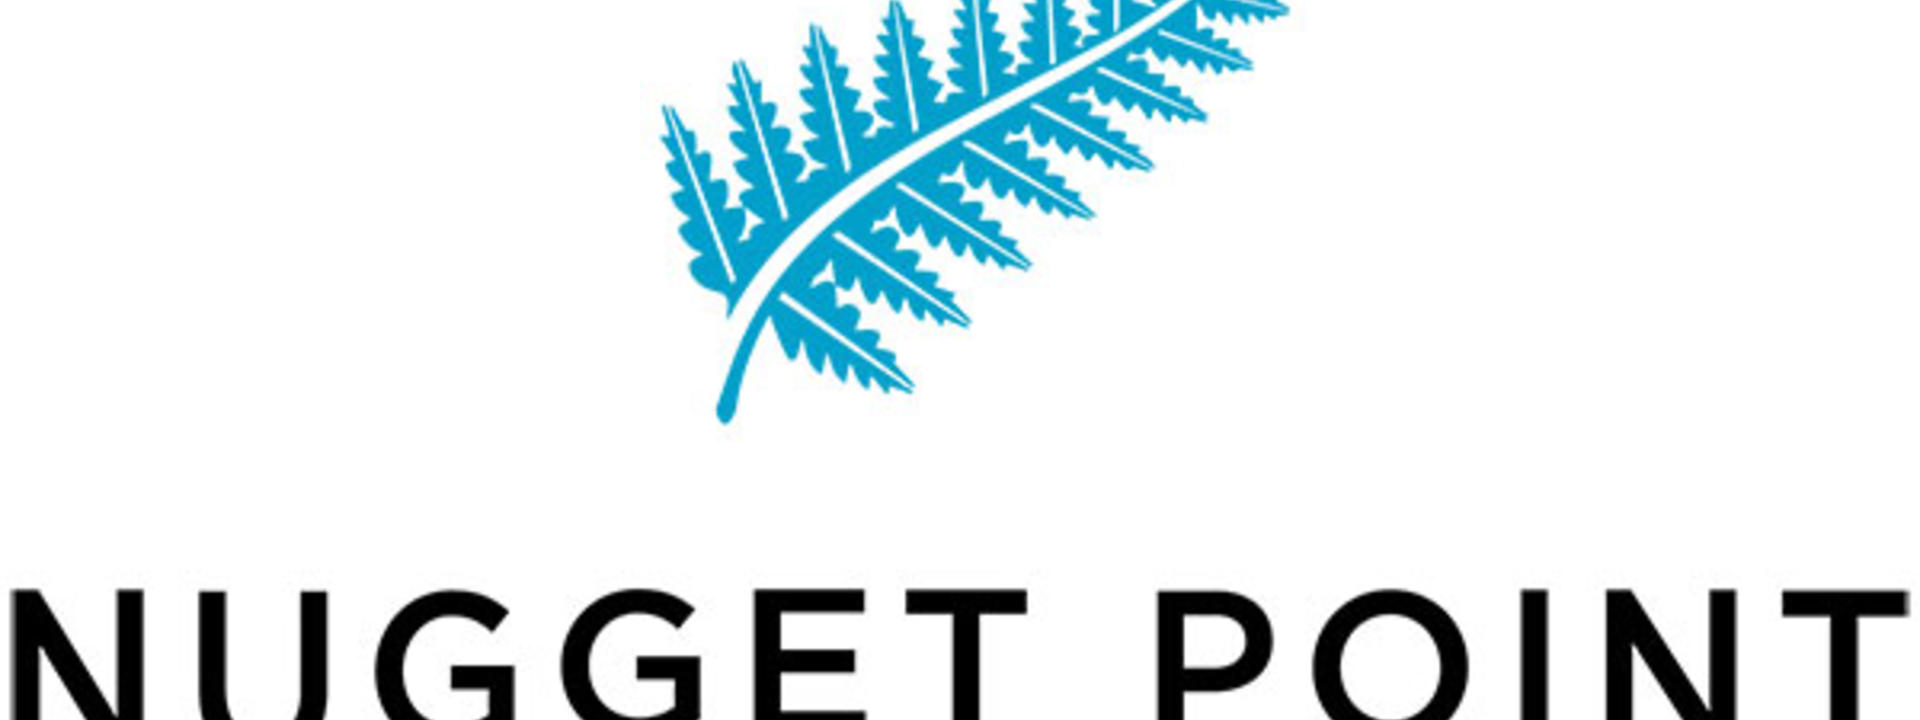 Nugget-Point-Logo-600px (002)_1.jpg